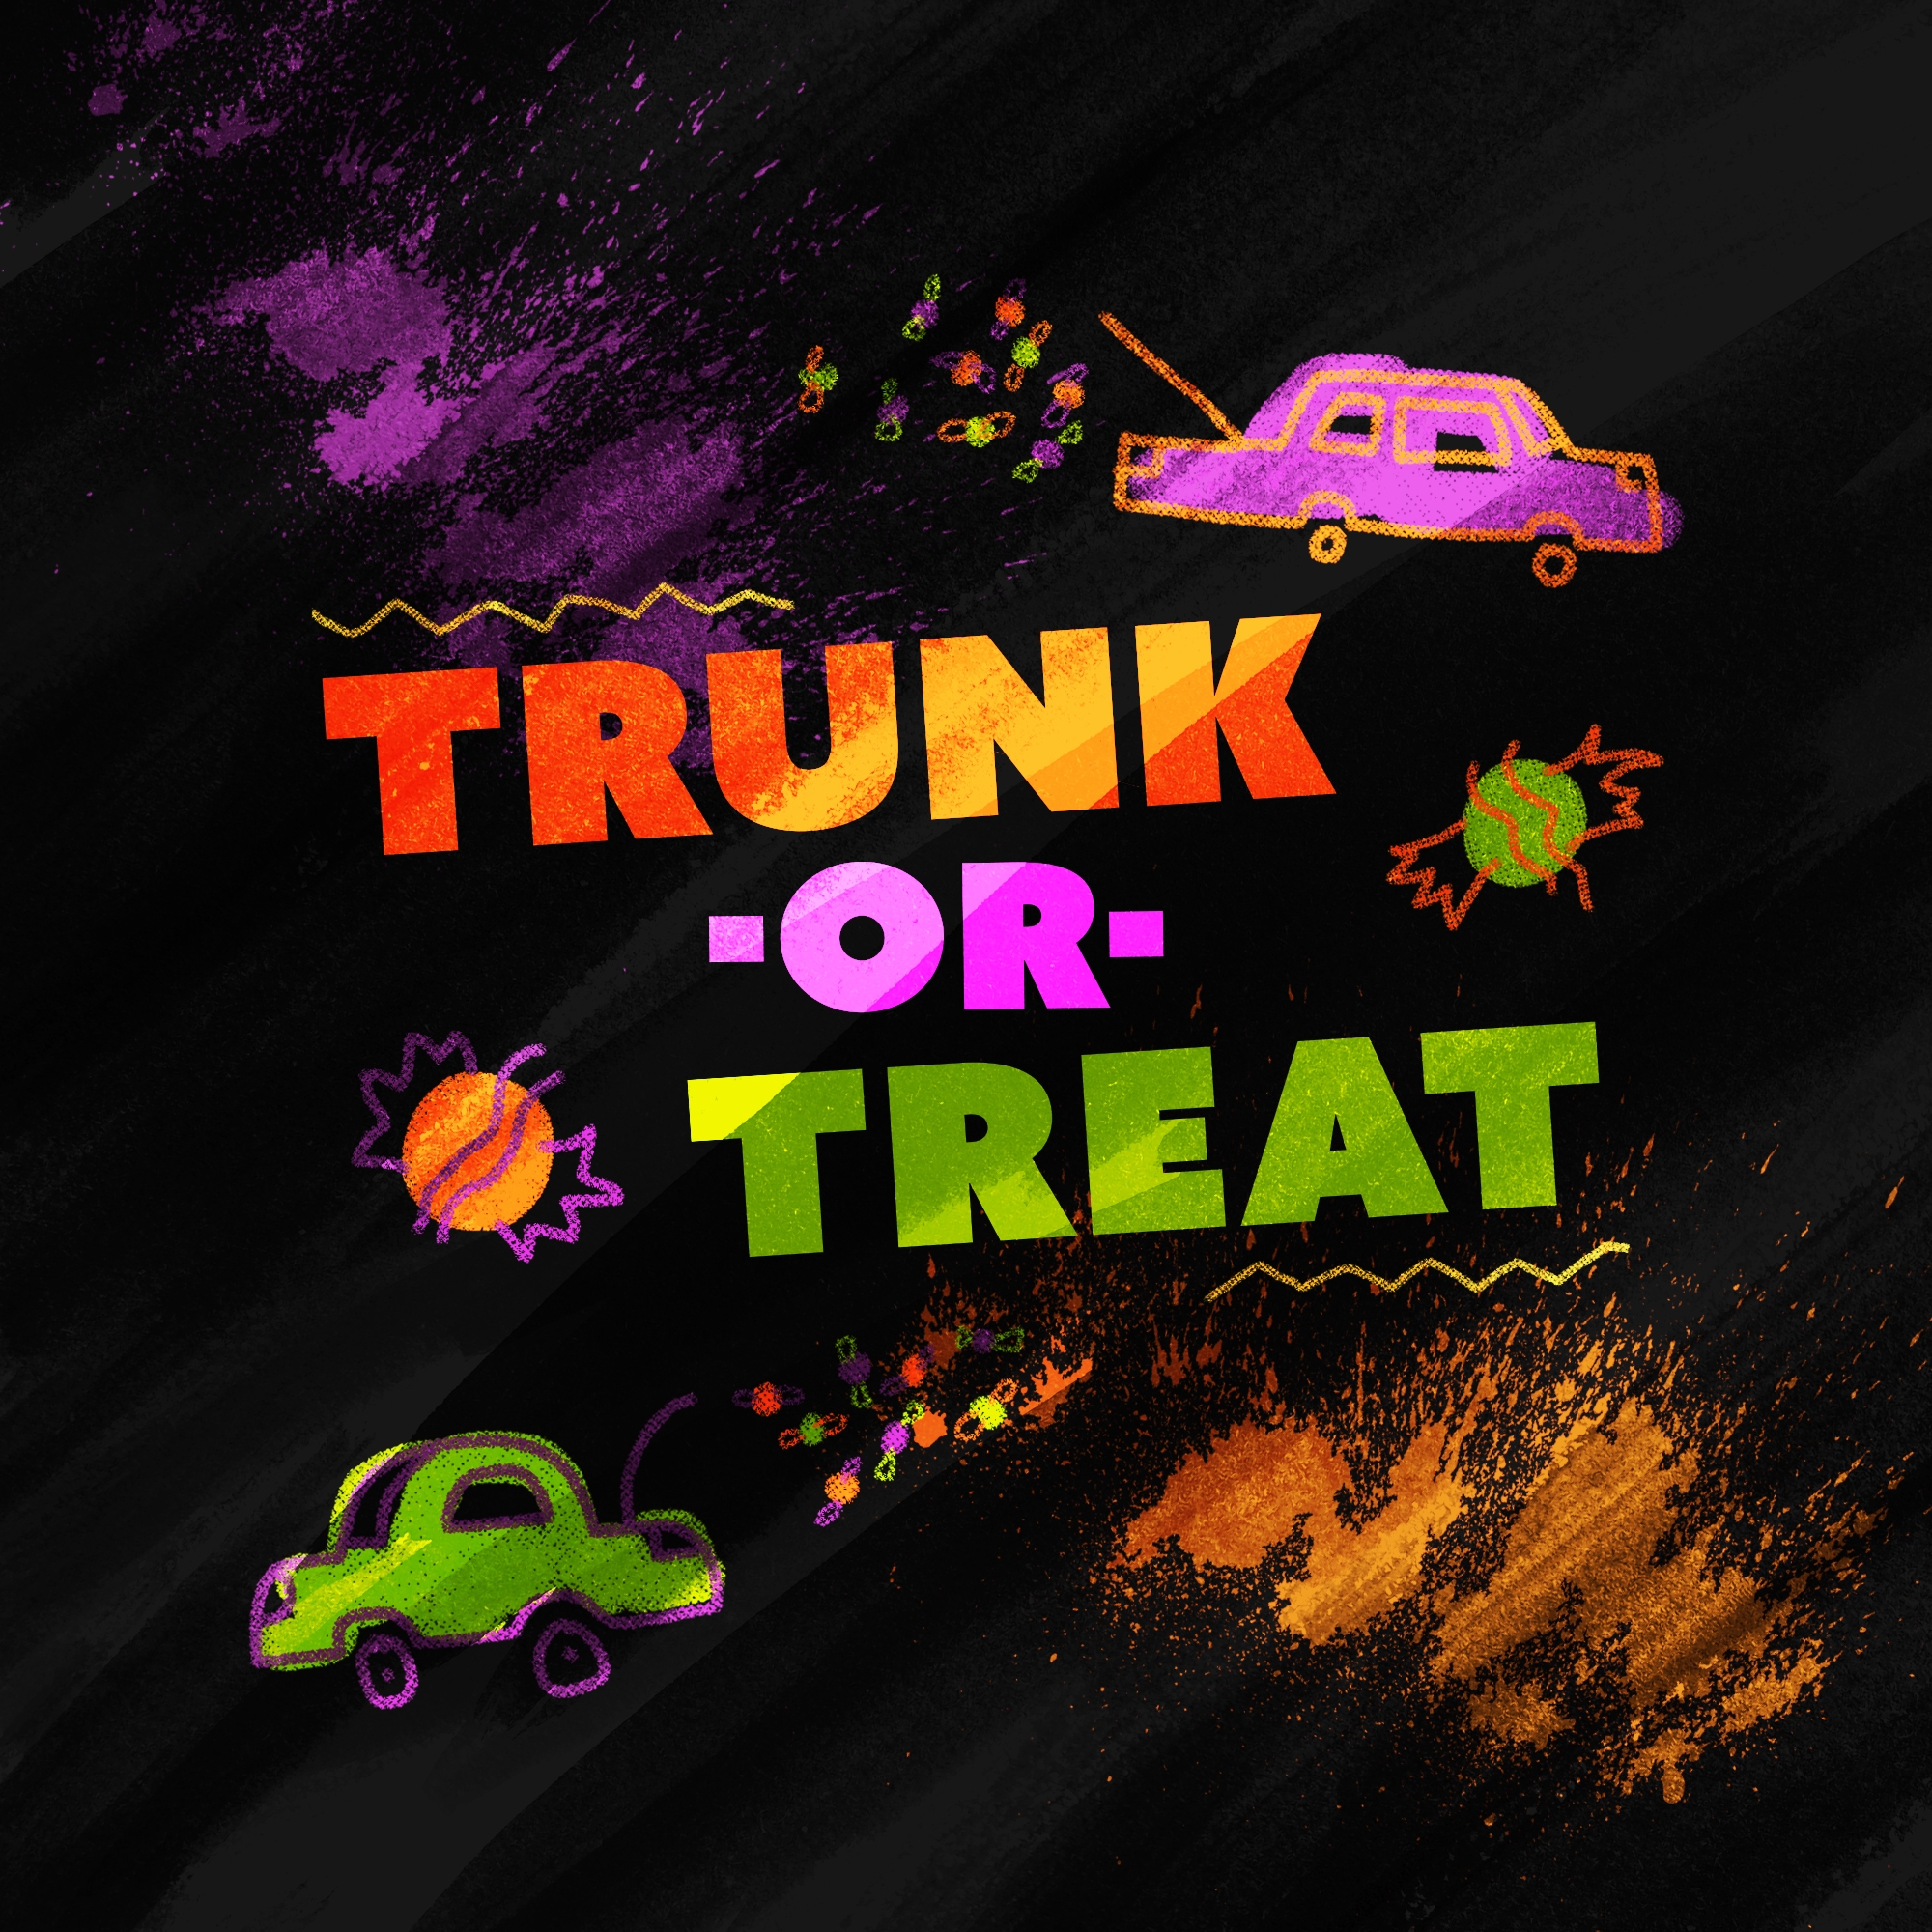 Fall Festival & Trunk or Treat